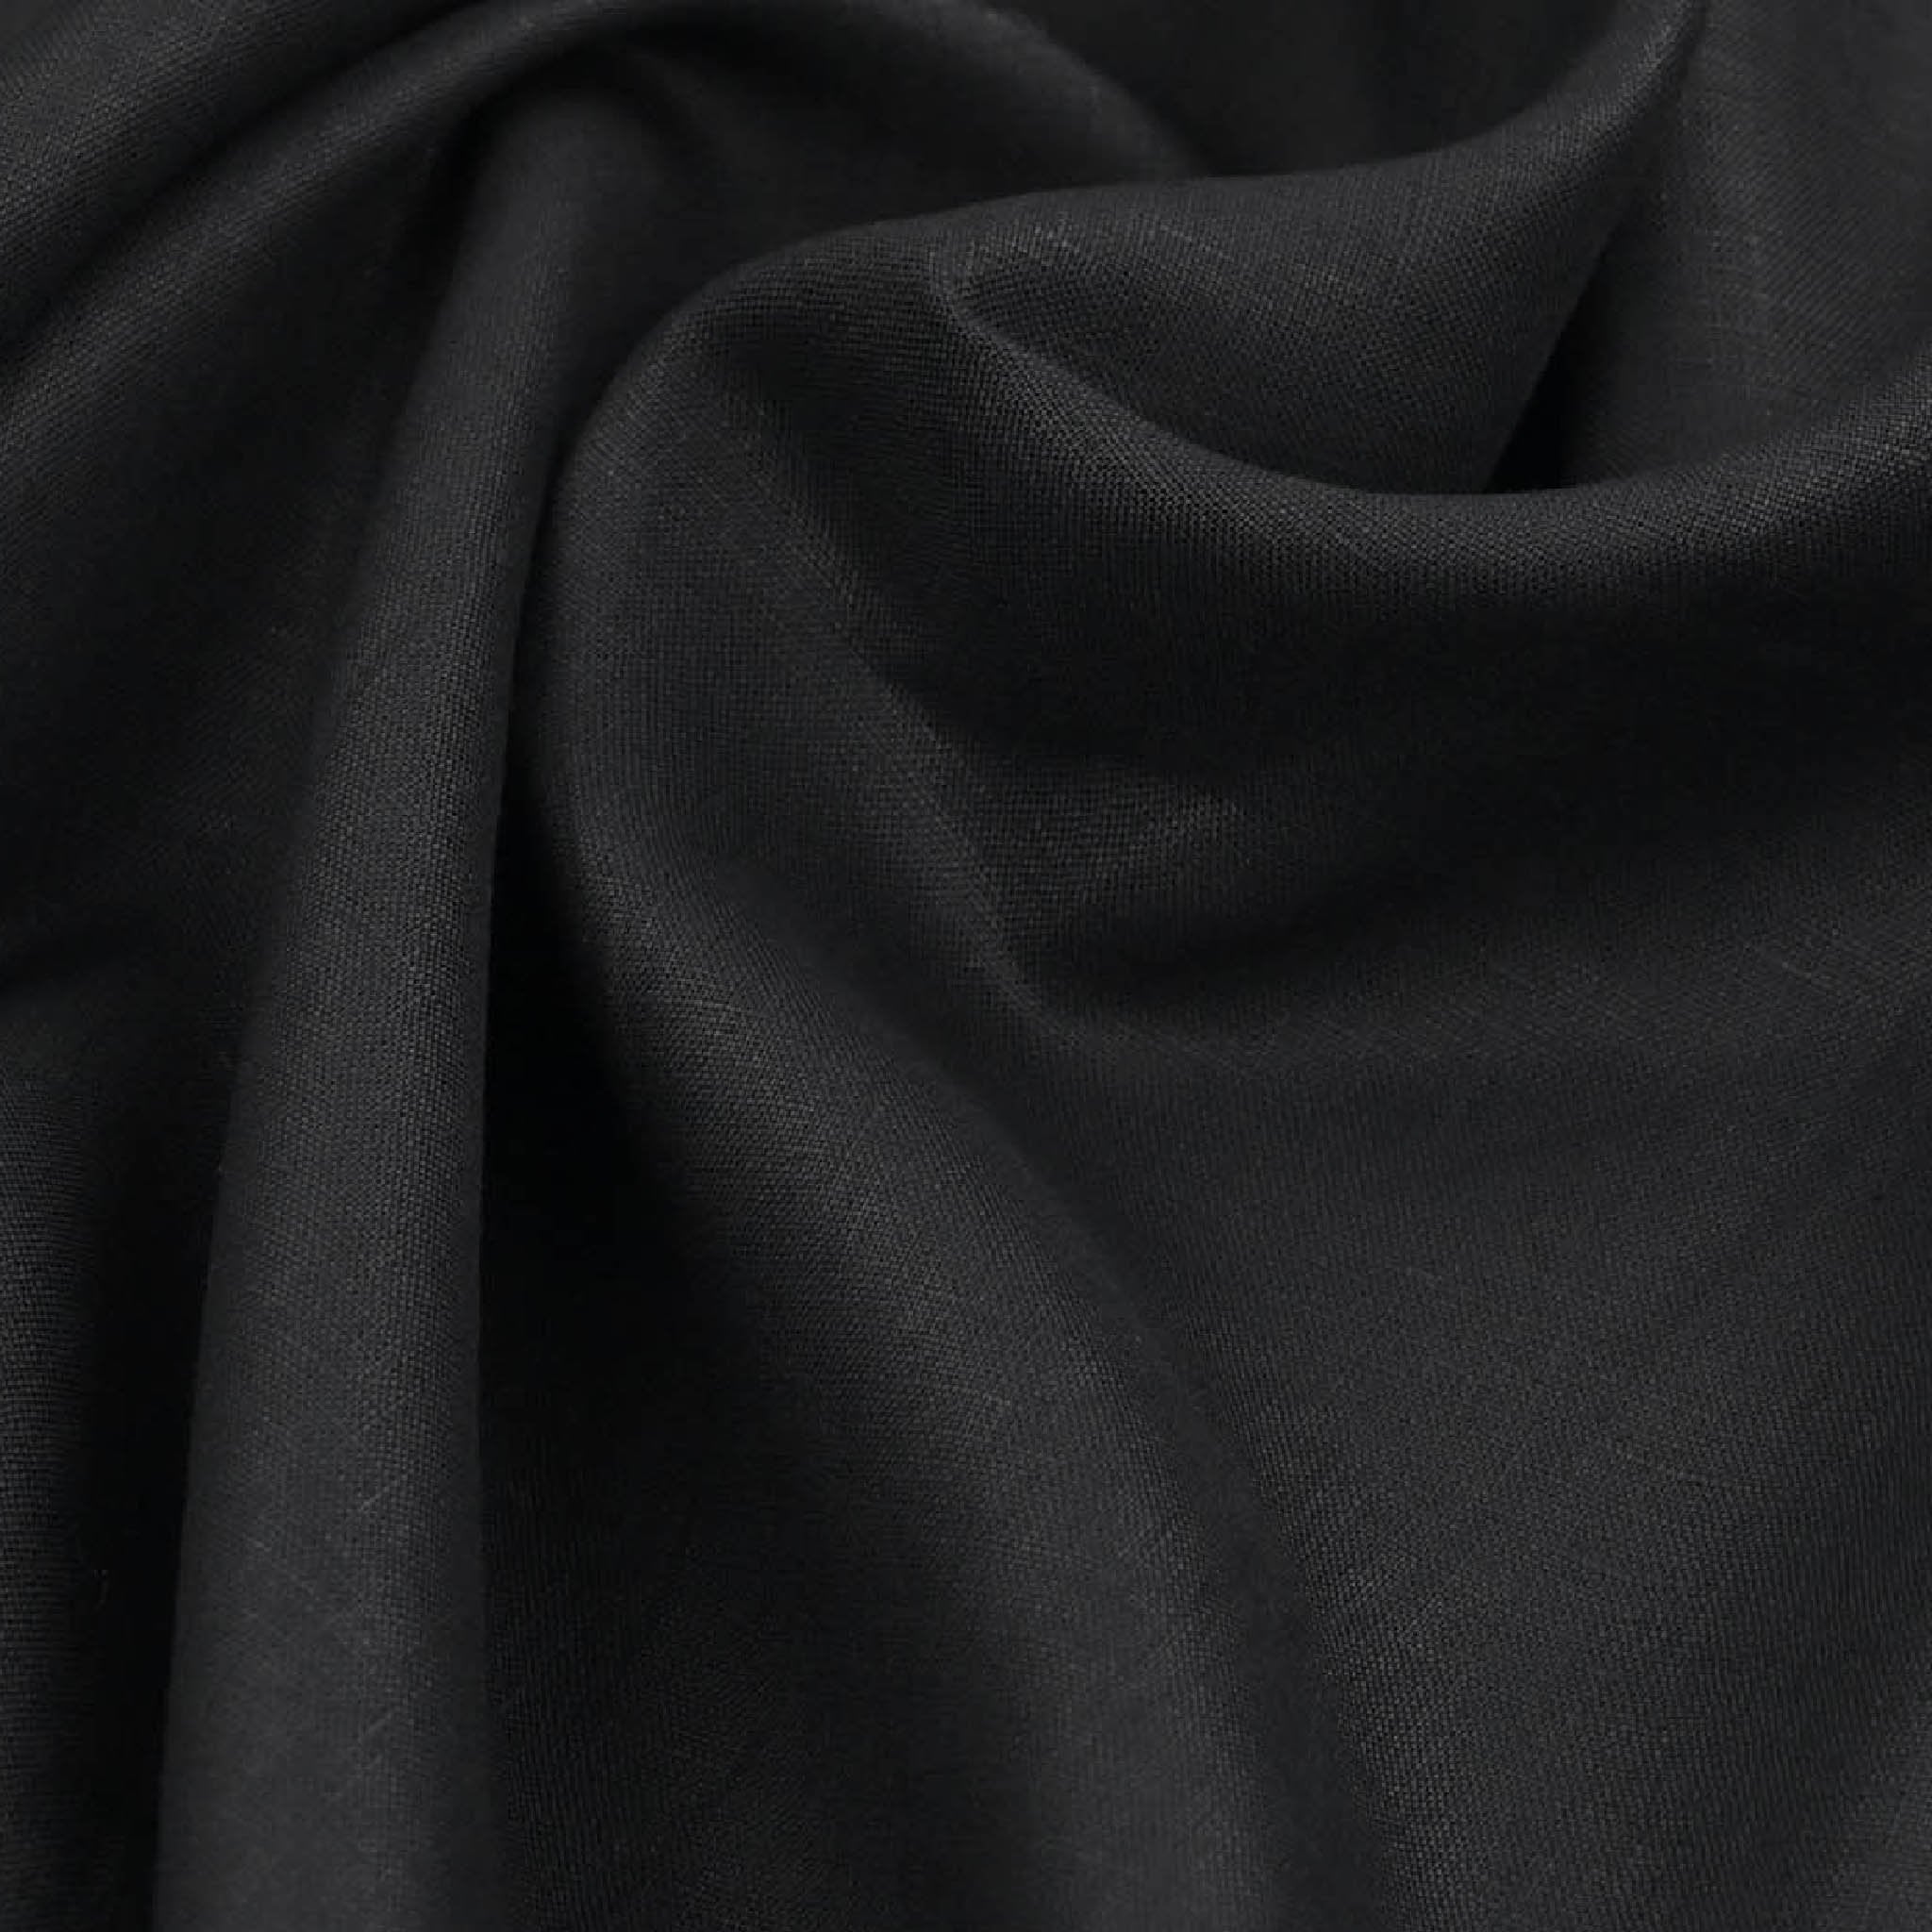 Black Linen Fabric 98186